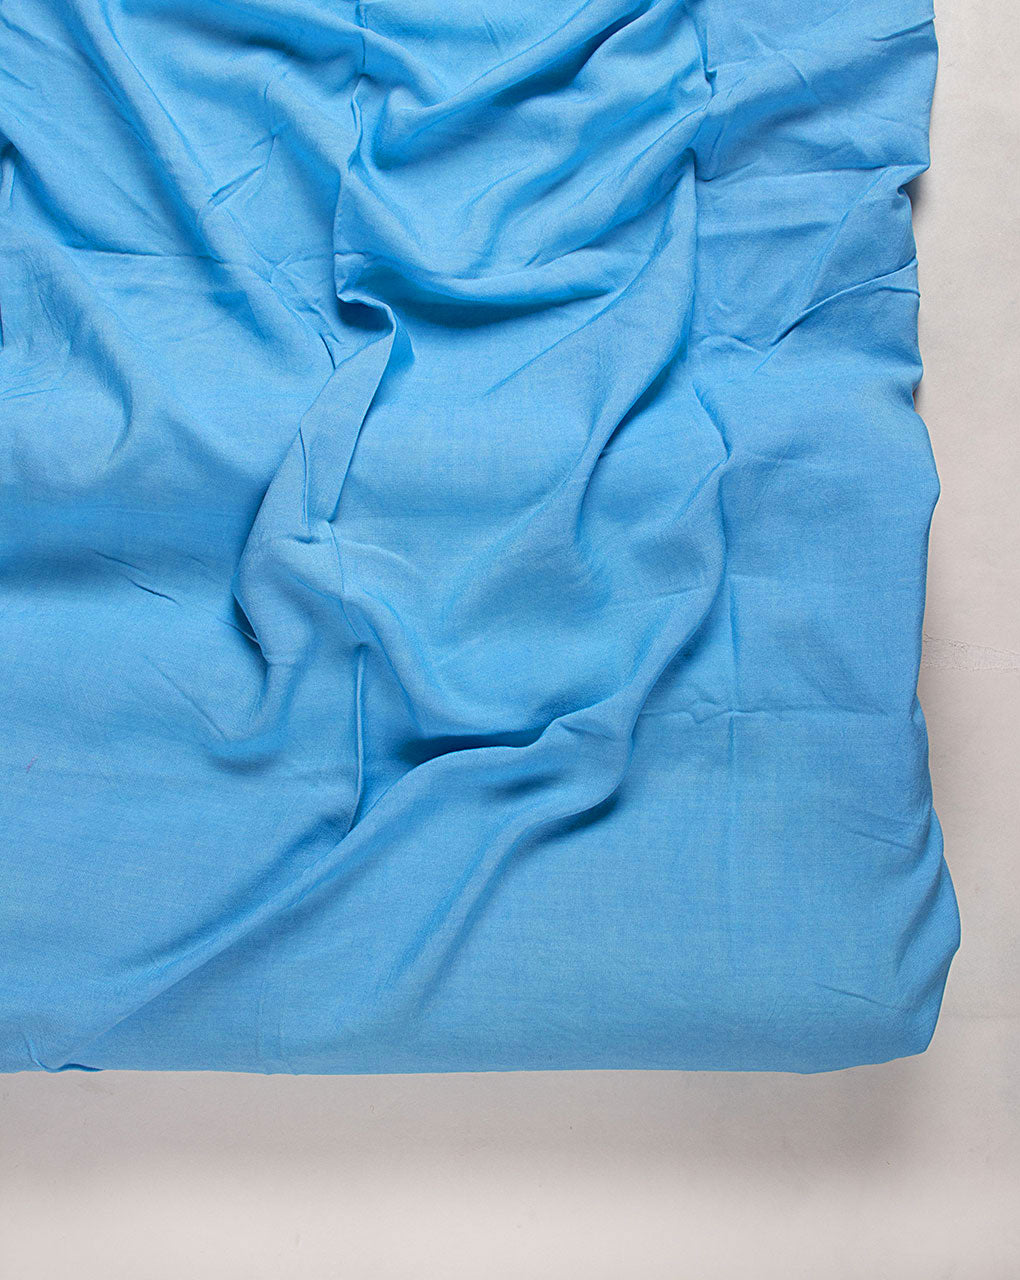 Blue Plain Birla Rayon Fabric ( Width 40 Inch )